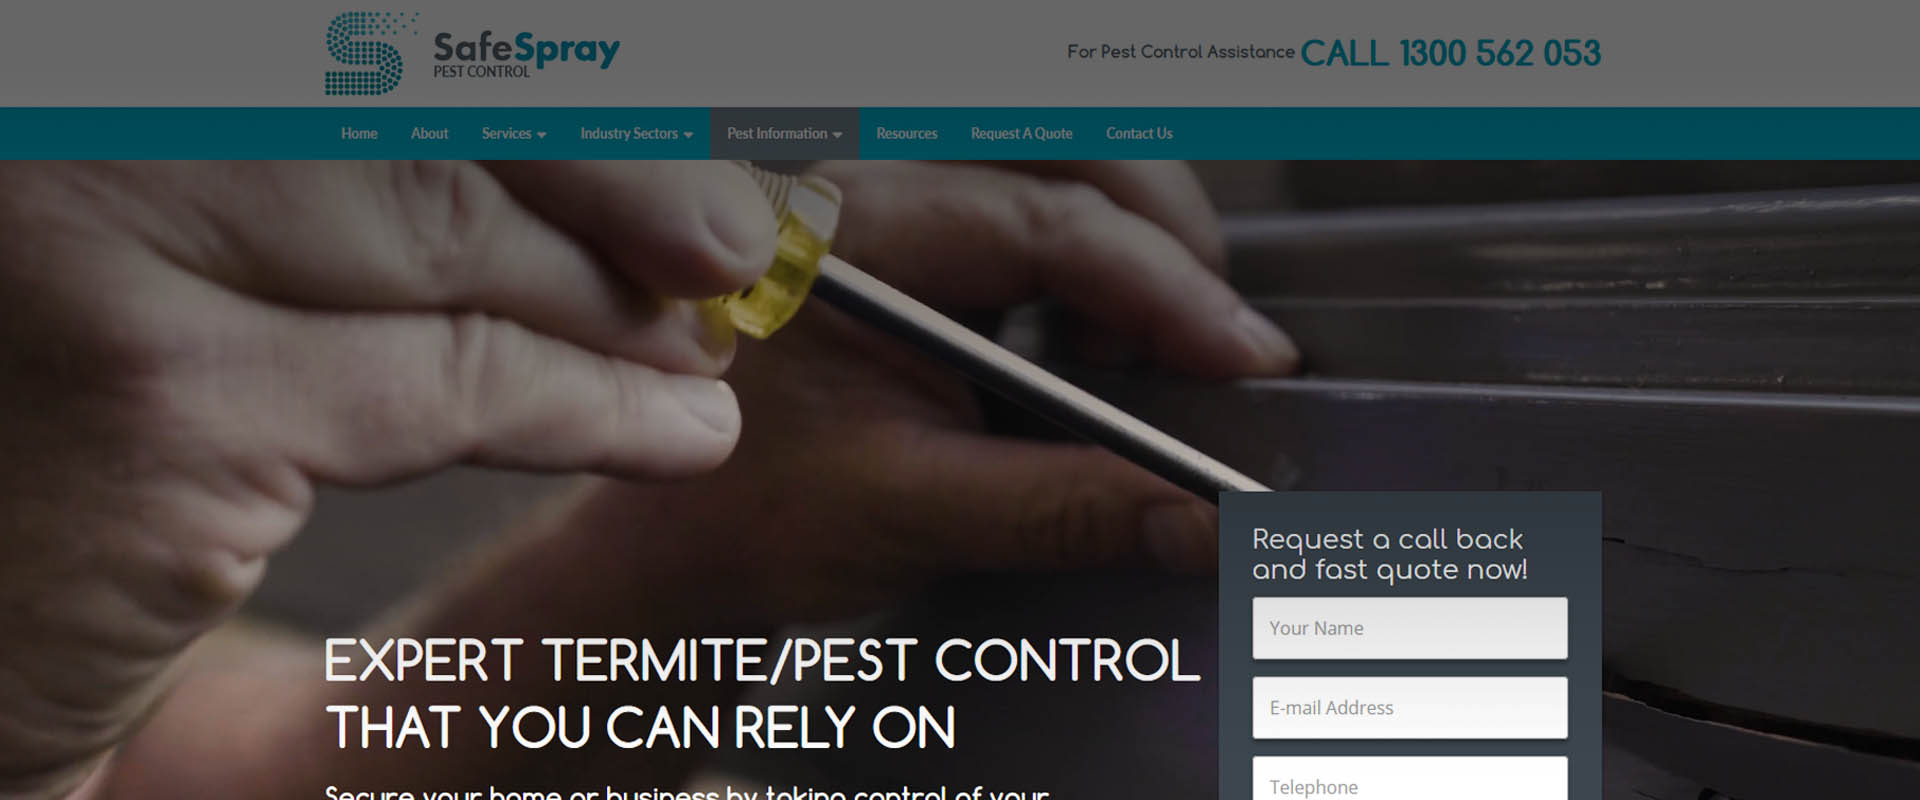 SafeSpray Pest Control